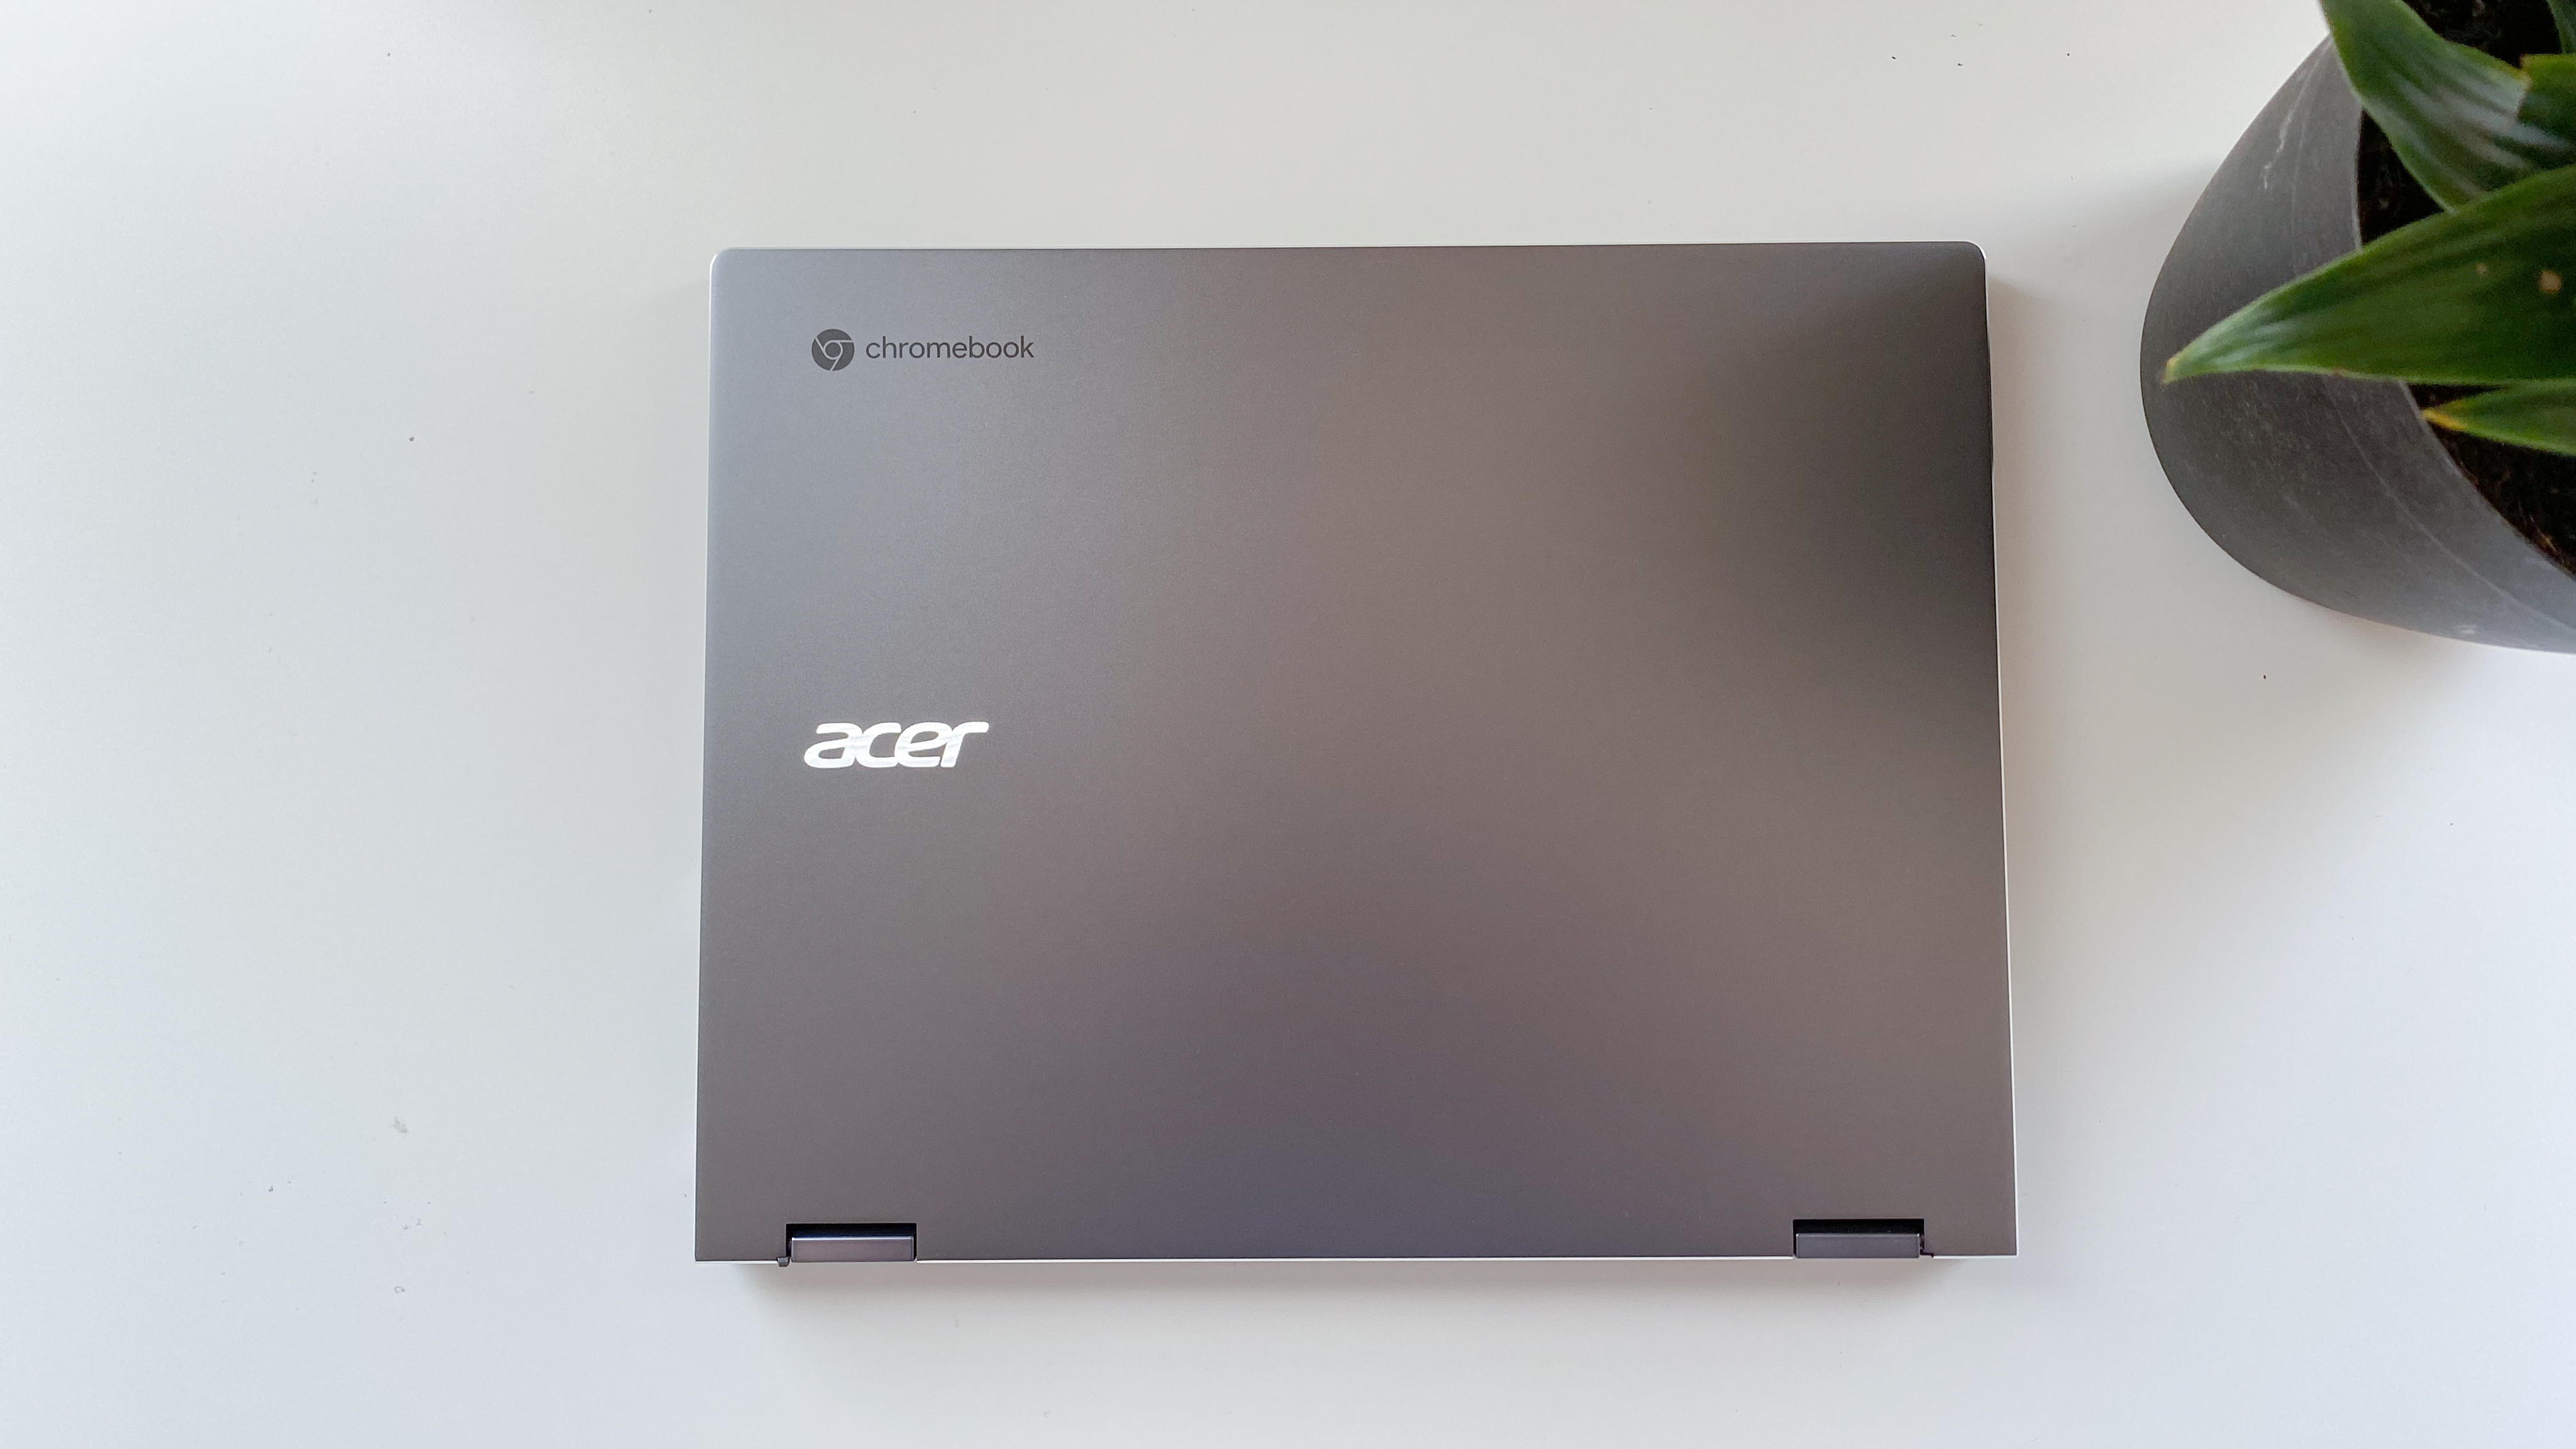 Acer Chromebook Spin 713 2021 Review: A Speedy Chromebook